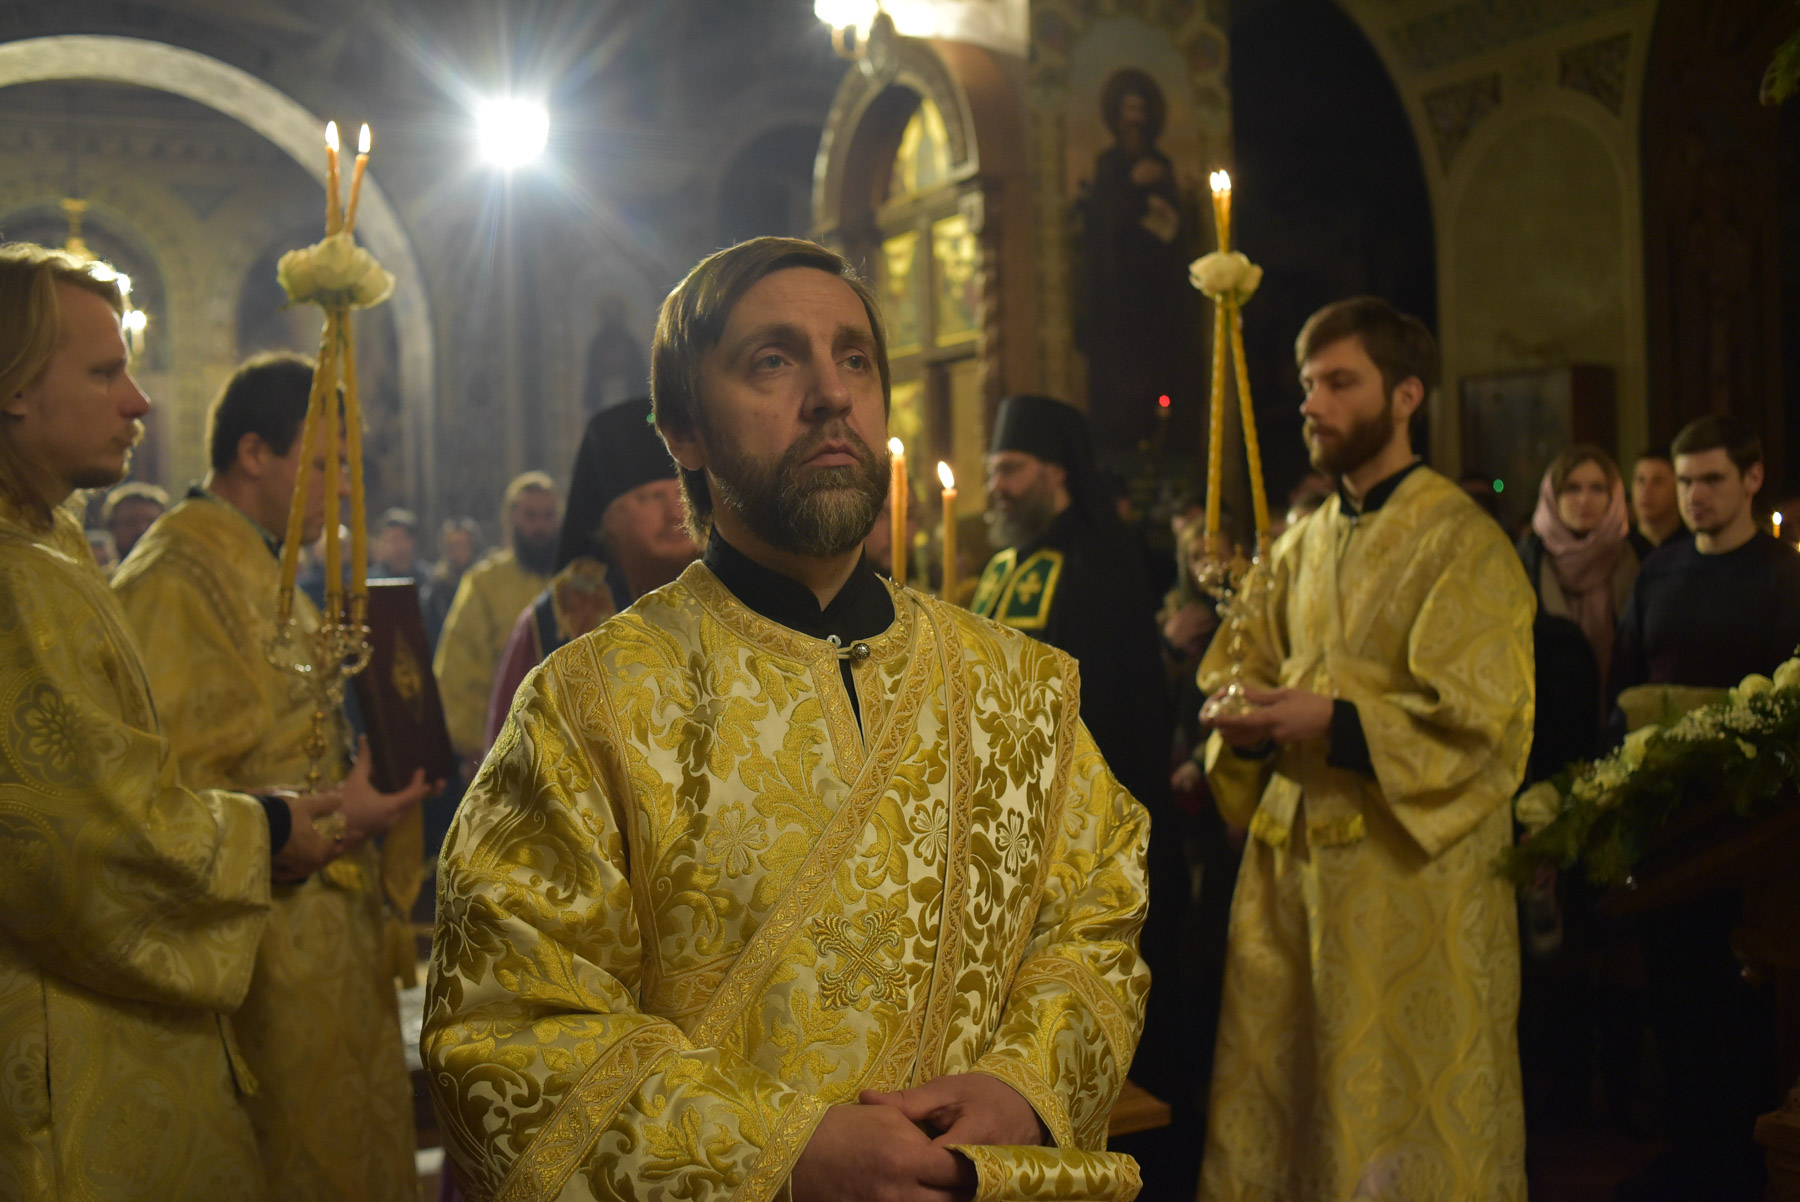 photos of orthodox christmas 0122